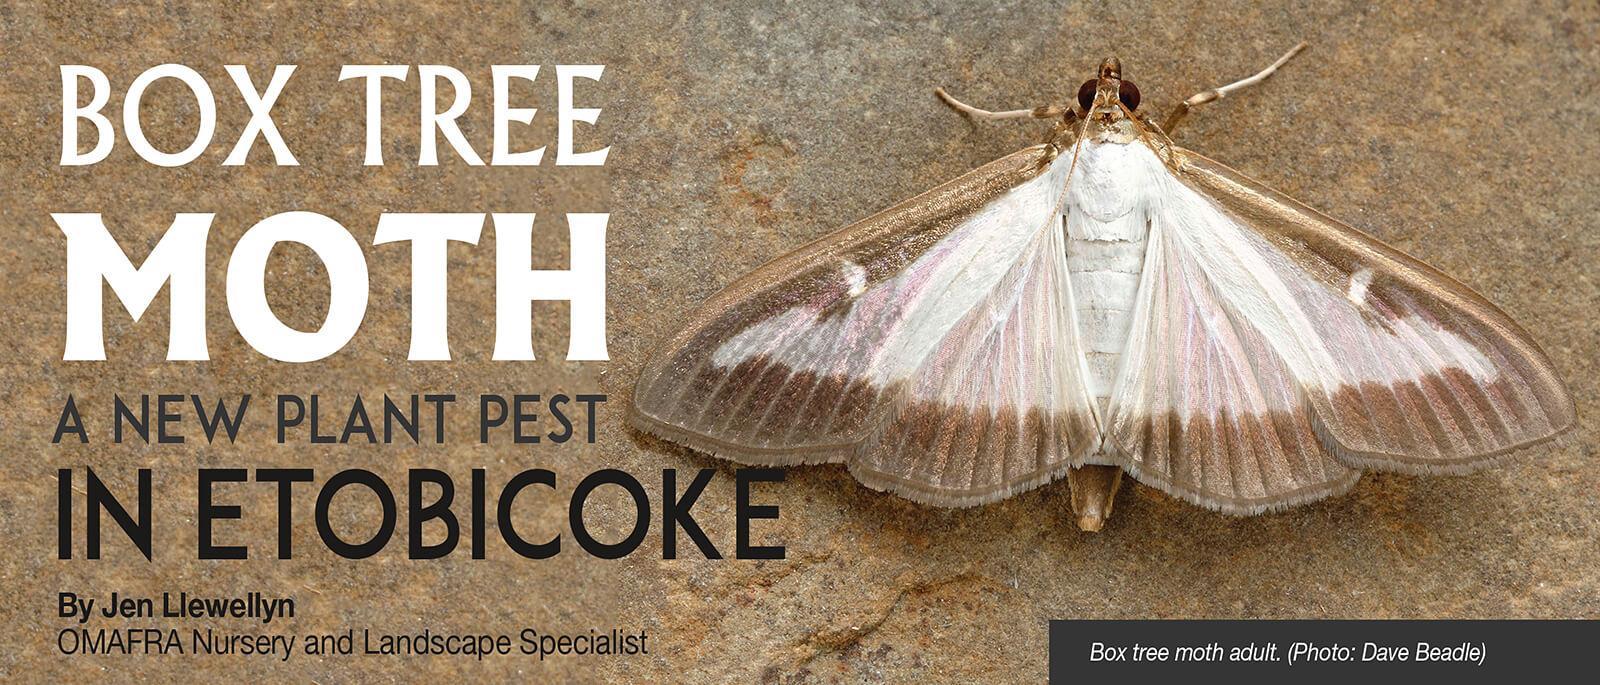 Box tree moth a new plant pest in Etobicoke